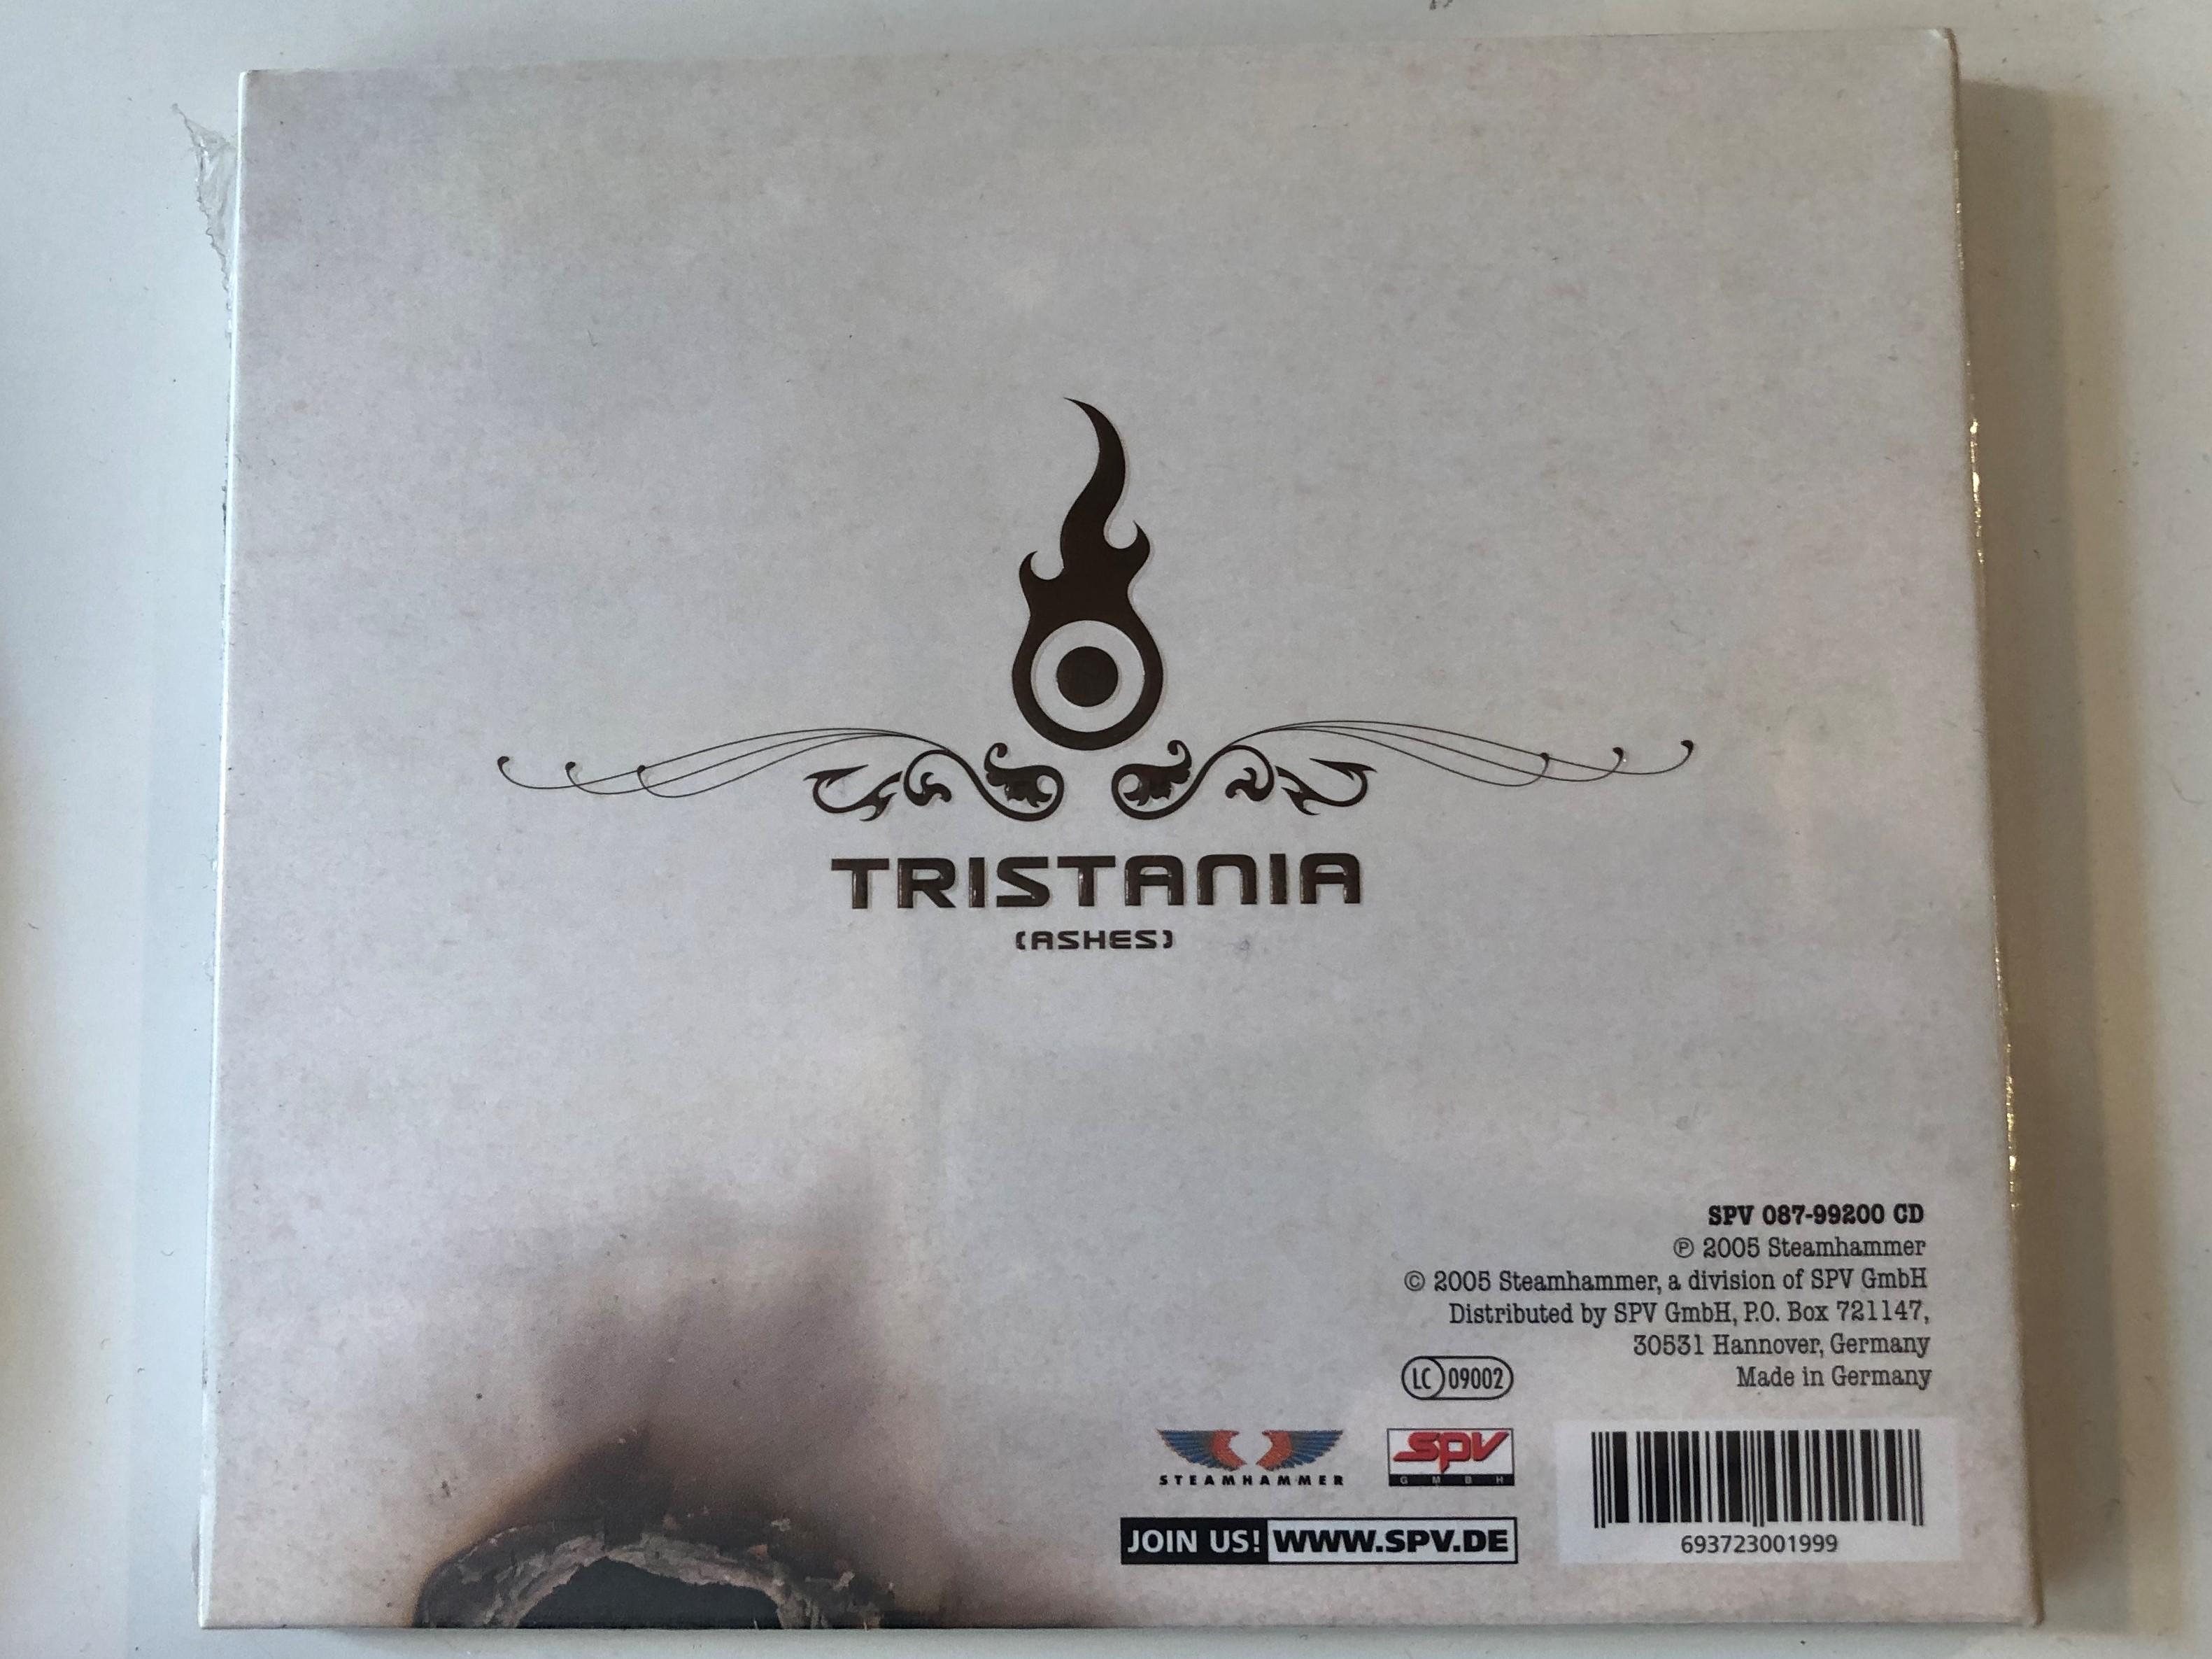 tristania-ashes-steamhammer-audio-cd-2005-spv-087-99200-cd-2-.jpg